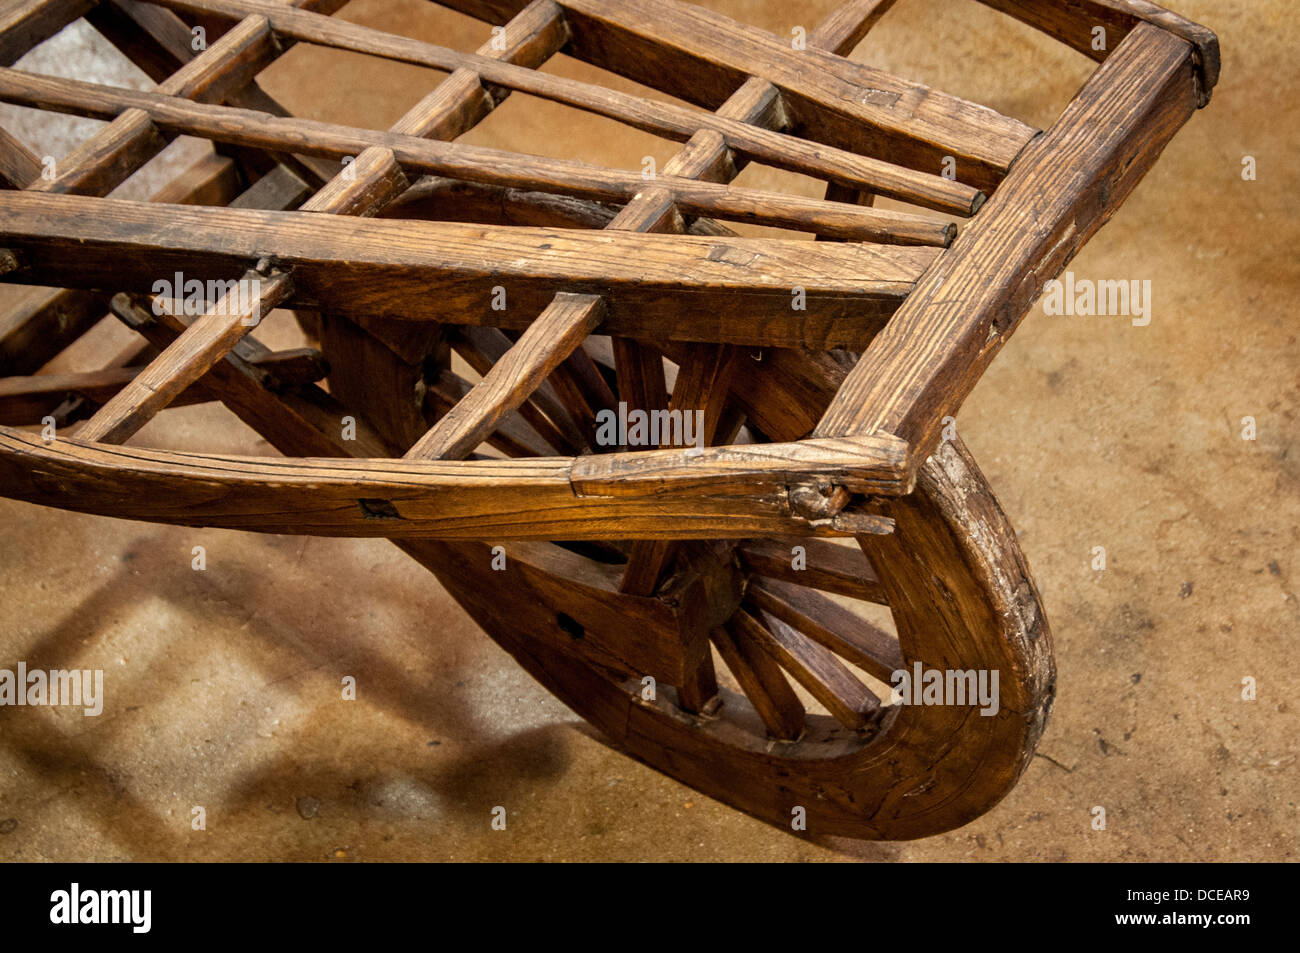 USA, Louisiana, Atchafalaya Basin, Breaux Bridge, Lagniappe Antiques, wheelbarrow. Stock Photo